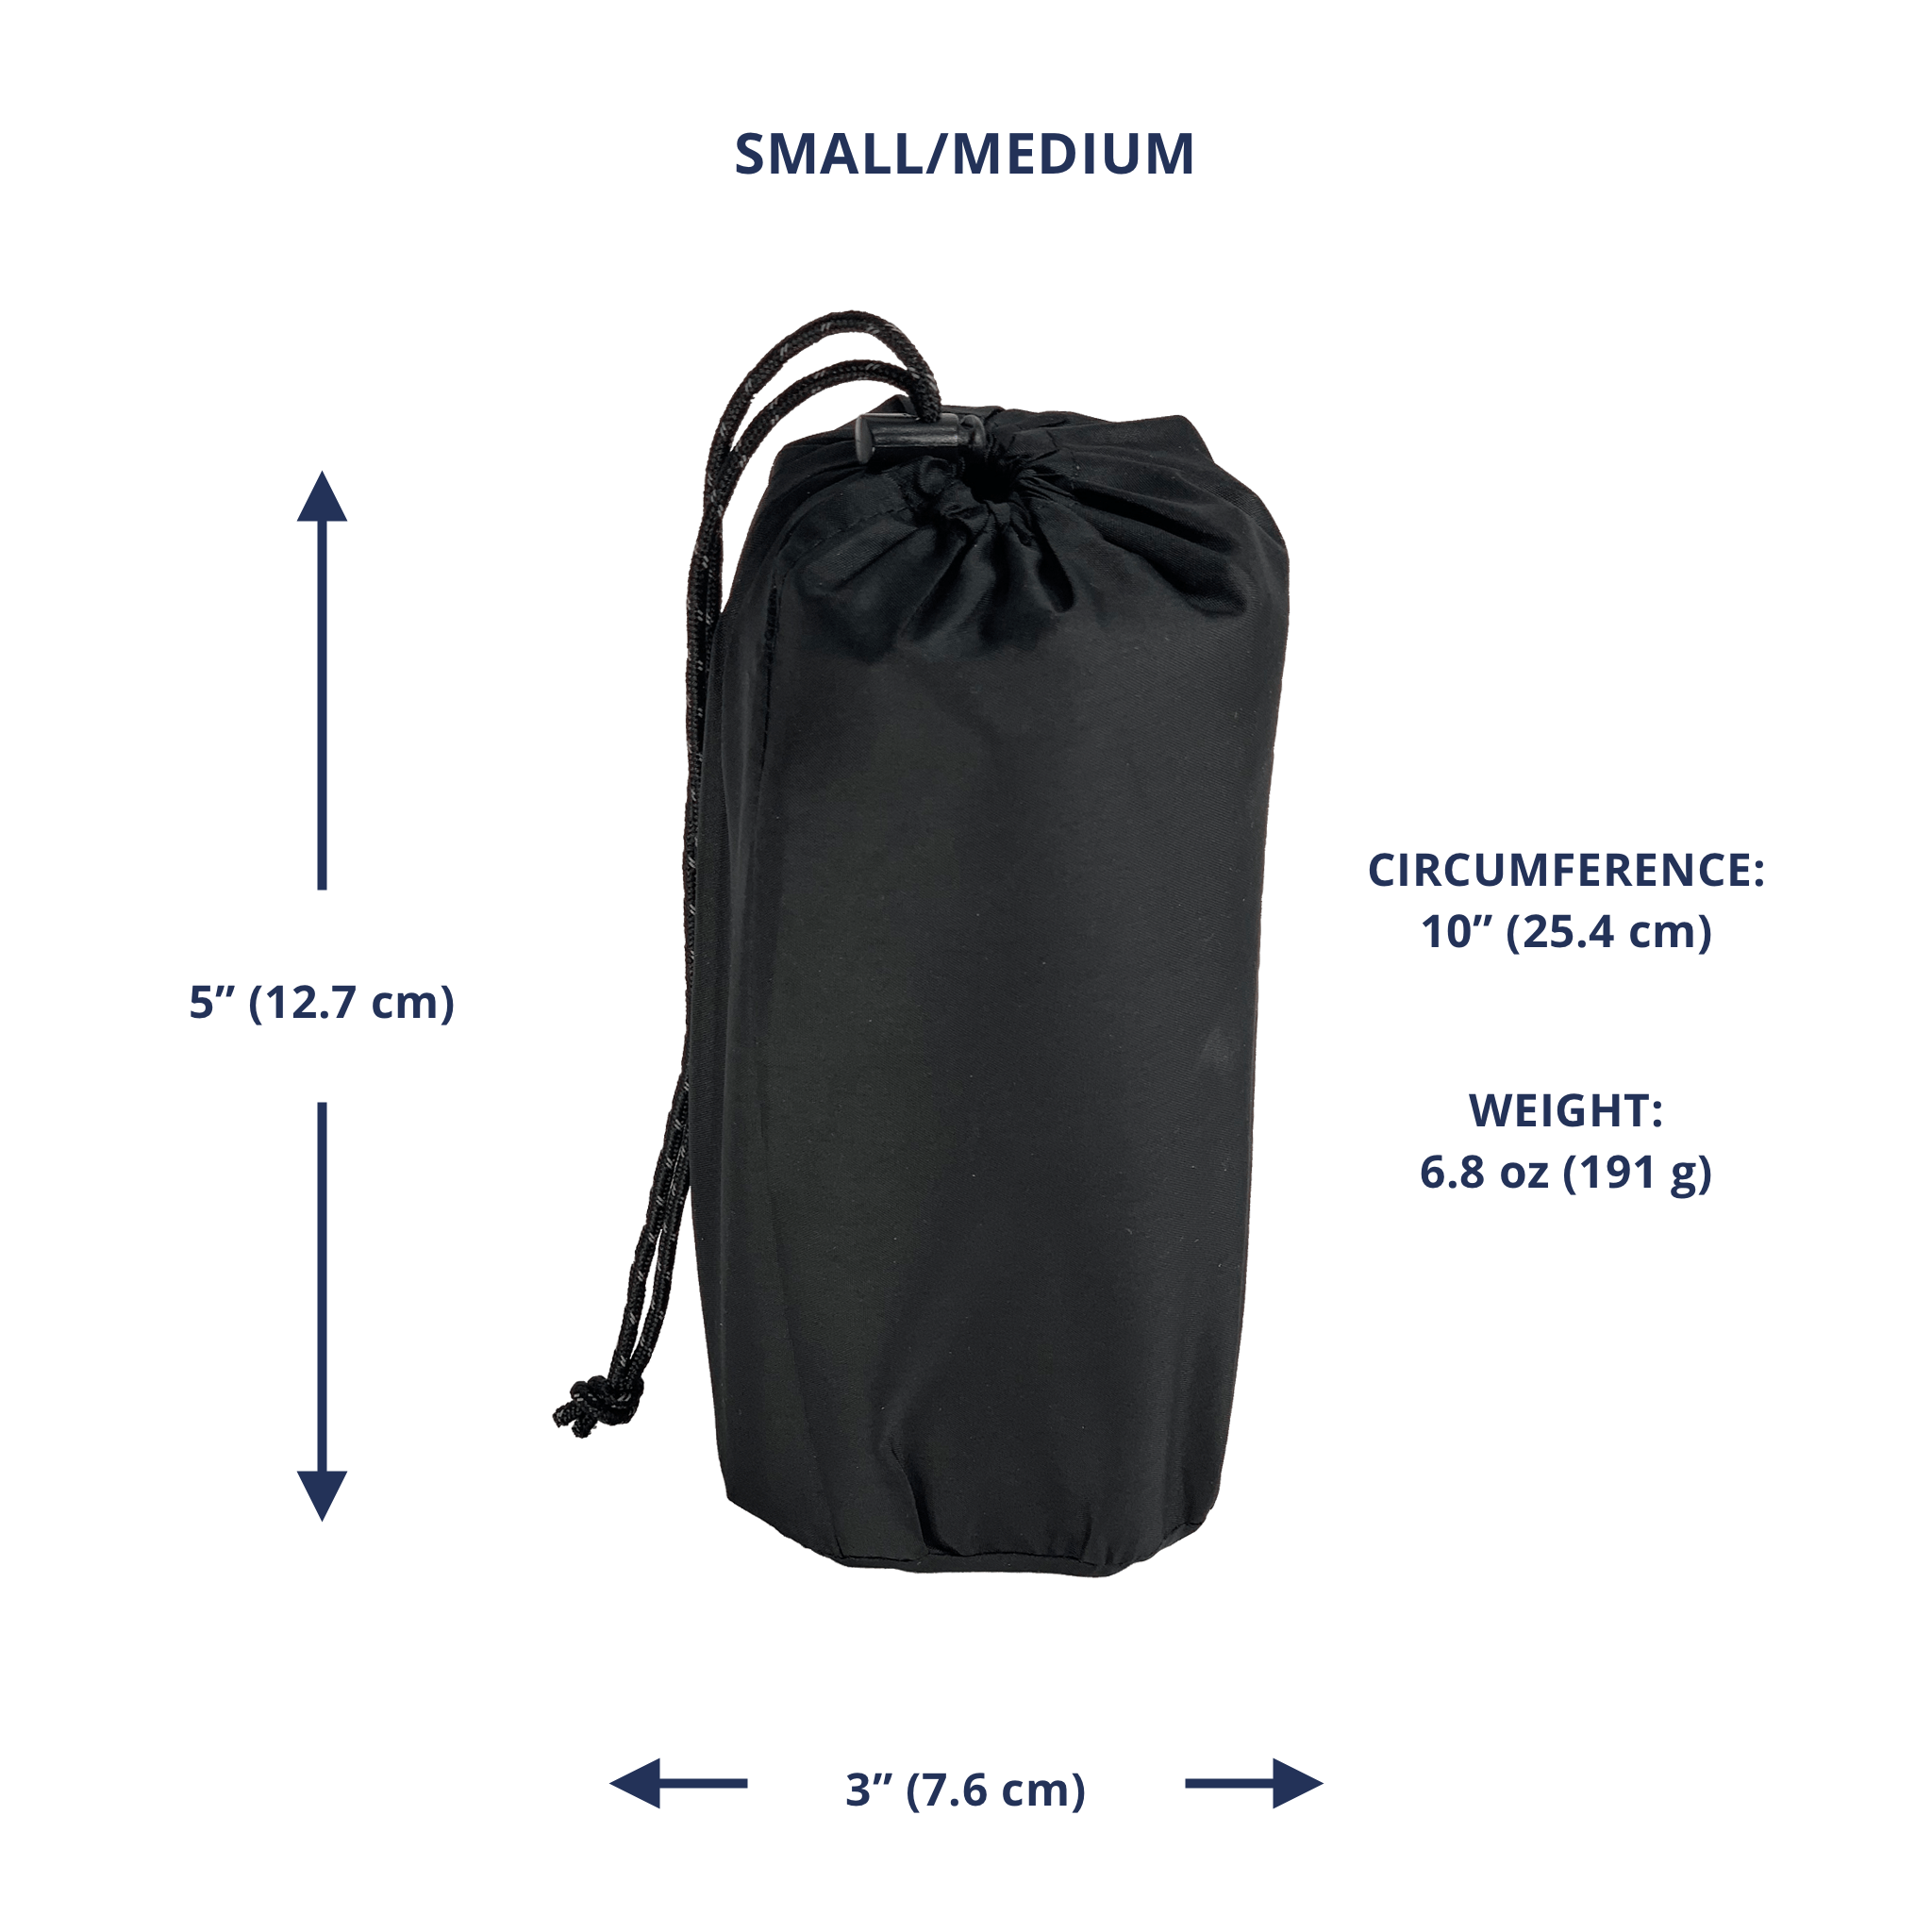 Small/Medium Sleeper Pack